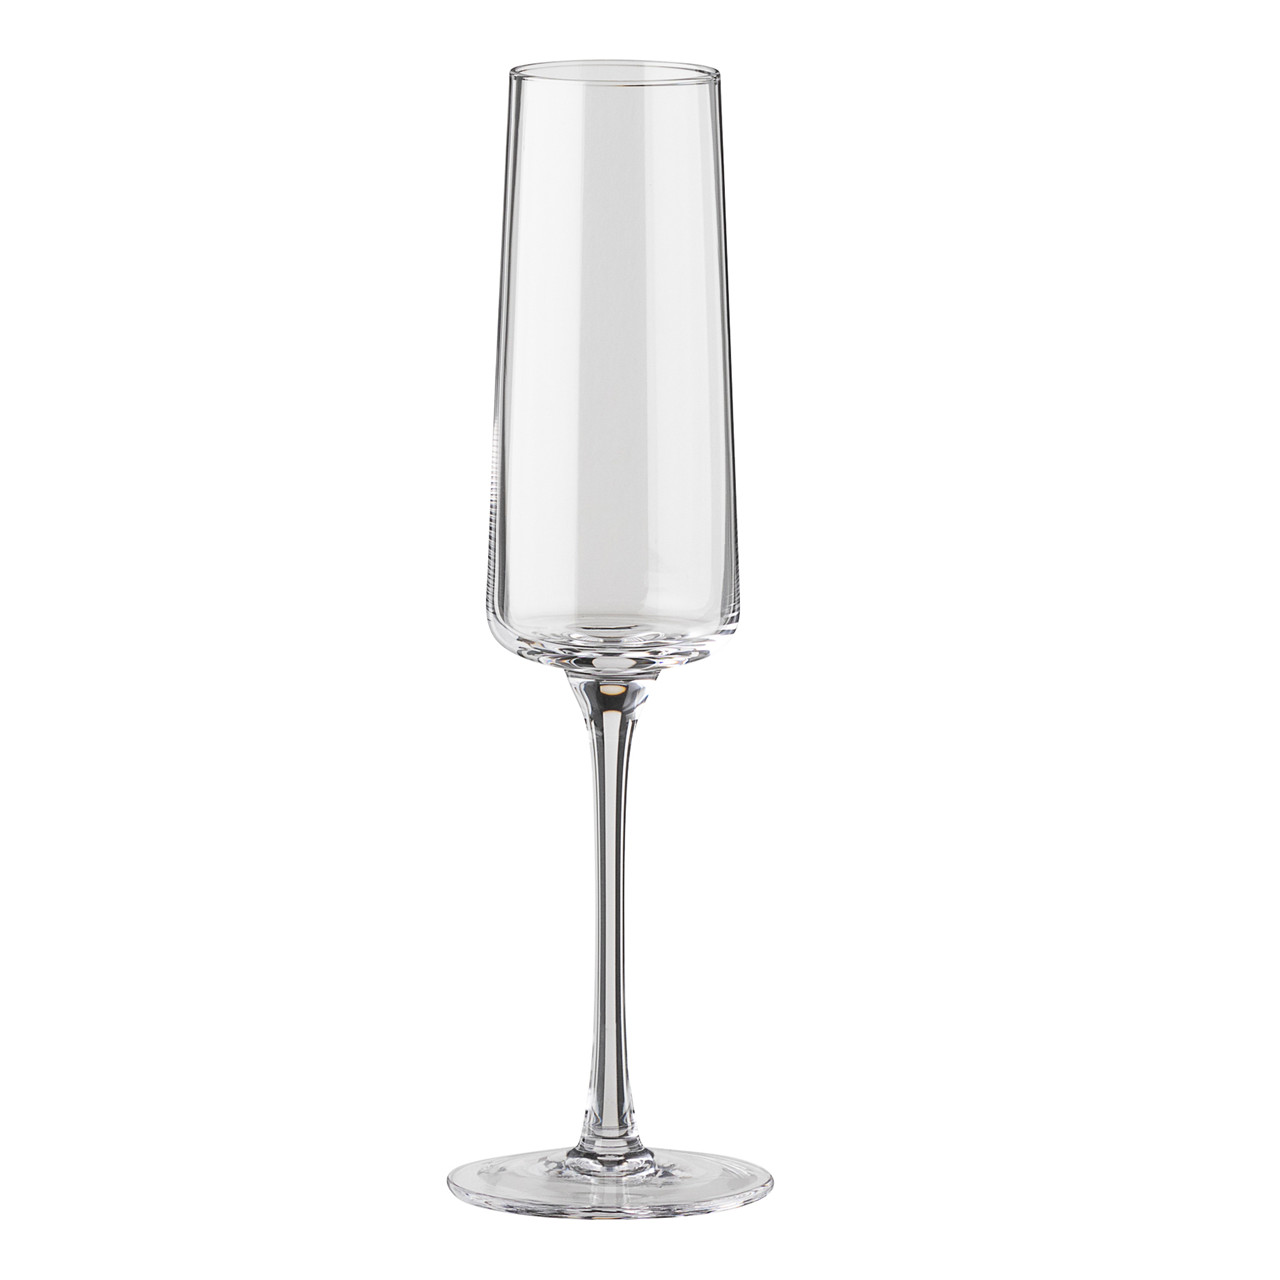 SINNERUP Classy champagneglas 4 stk.   (TRANSPERENT ONESIZE)